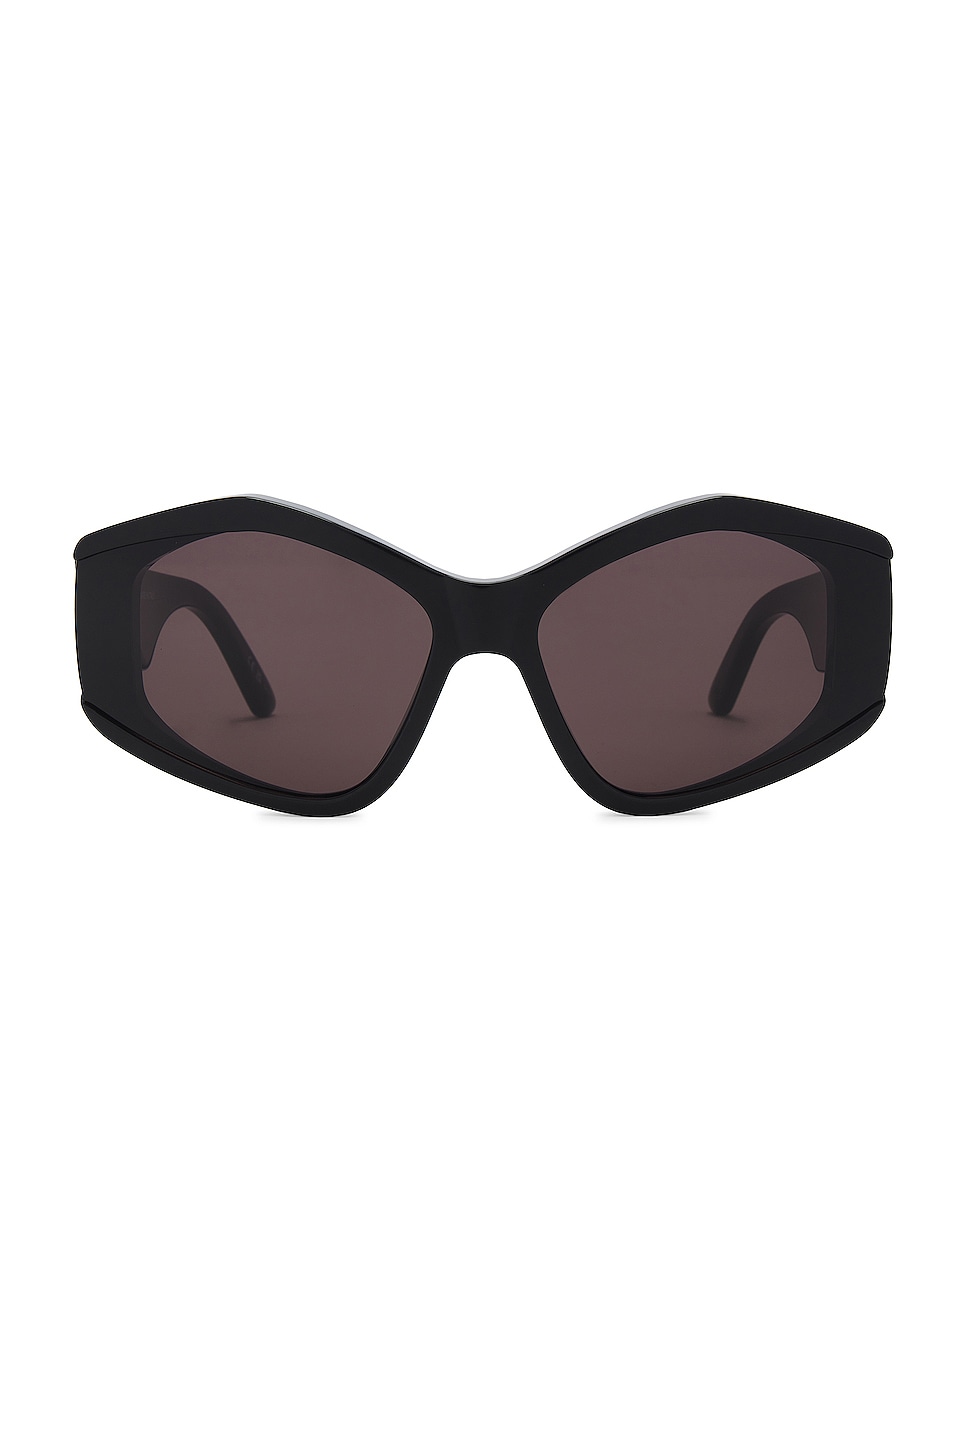 Edgy Geometrical Sunglasses in Black